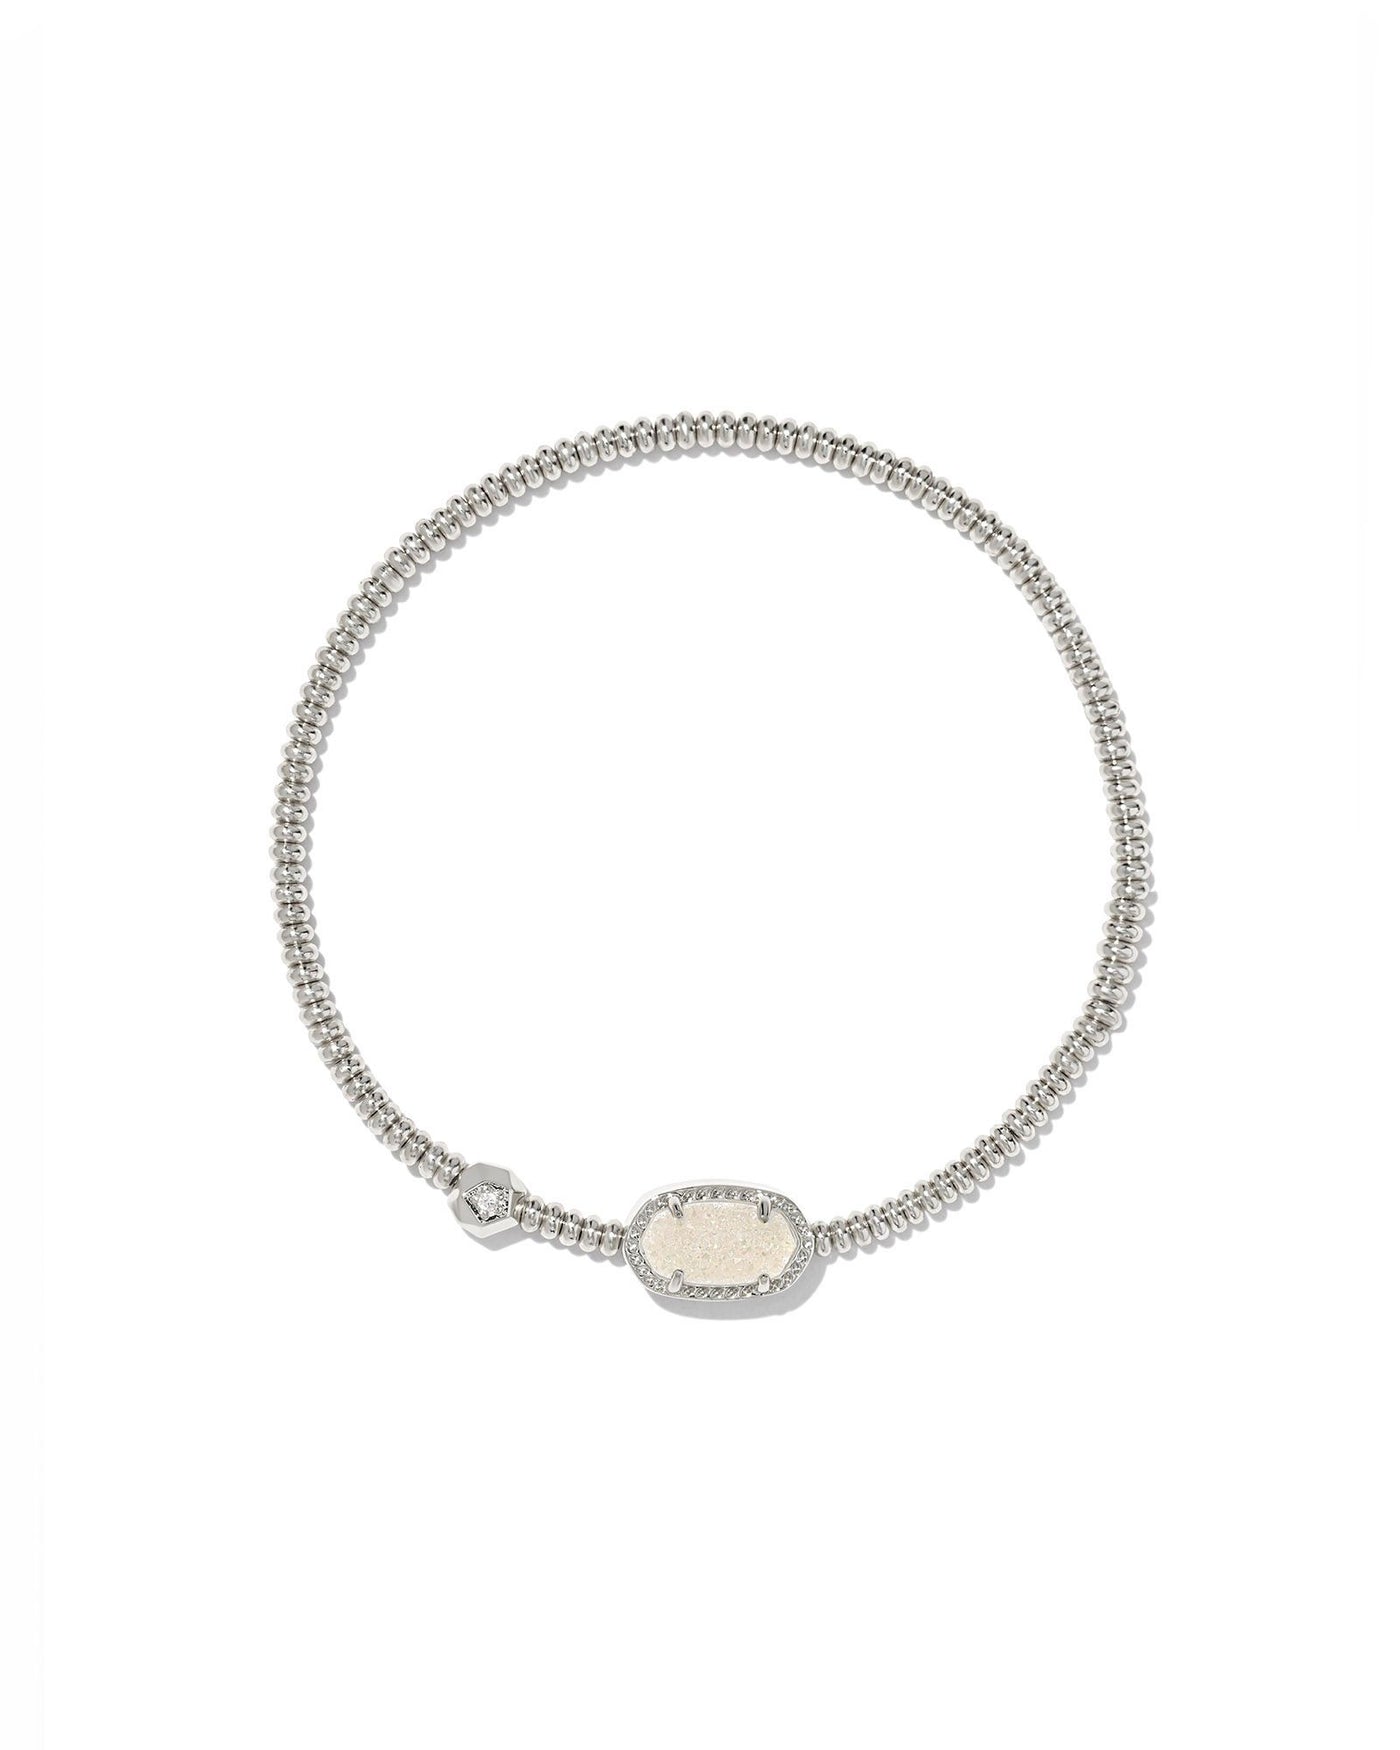 Kendra Scott Grayson Stretch Bracelet in Silver Iridescent Drusy on white background.